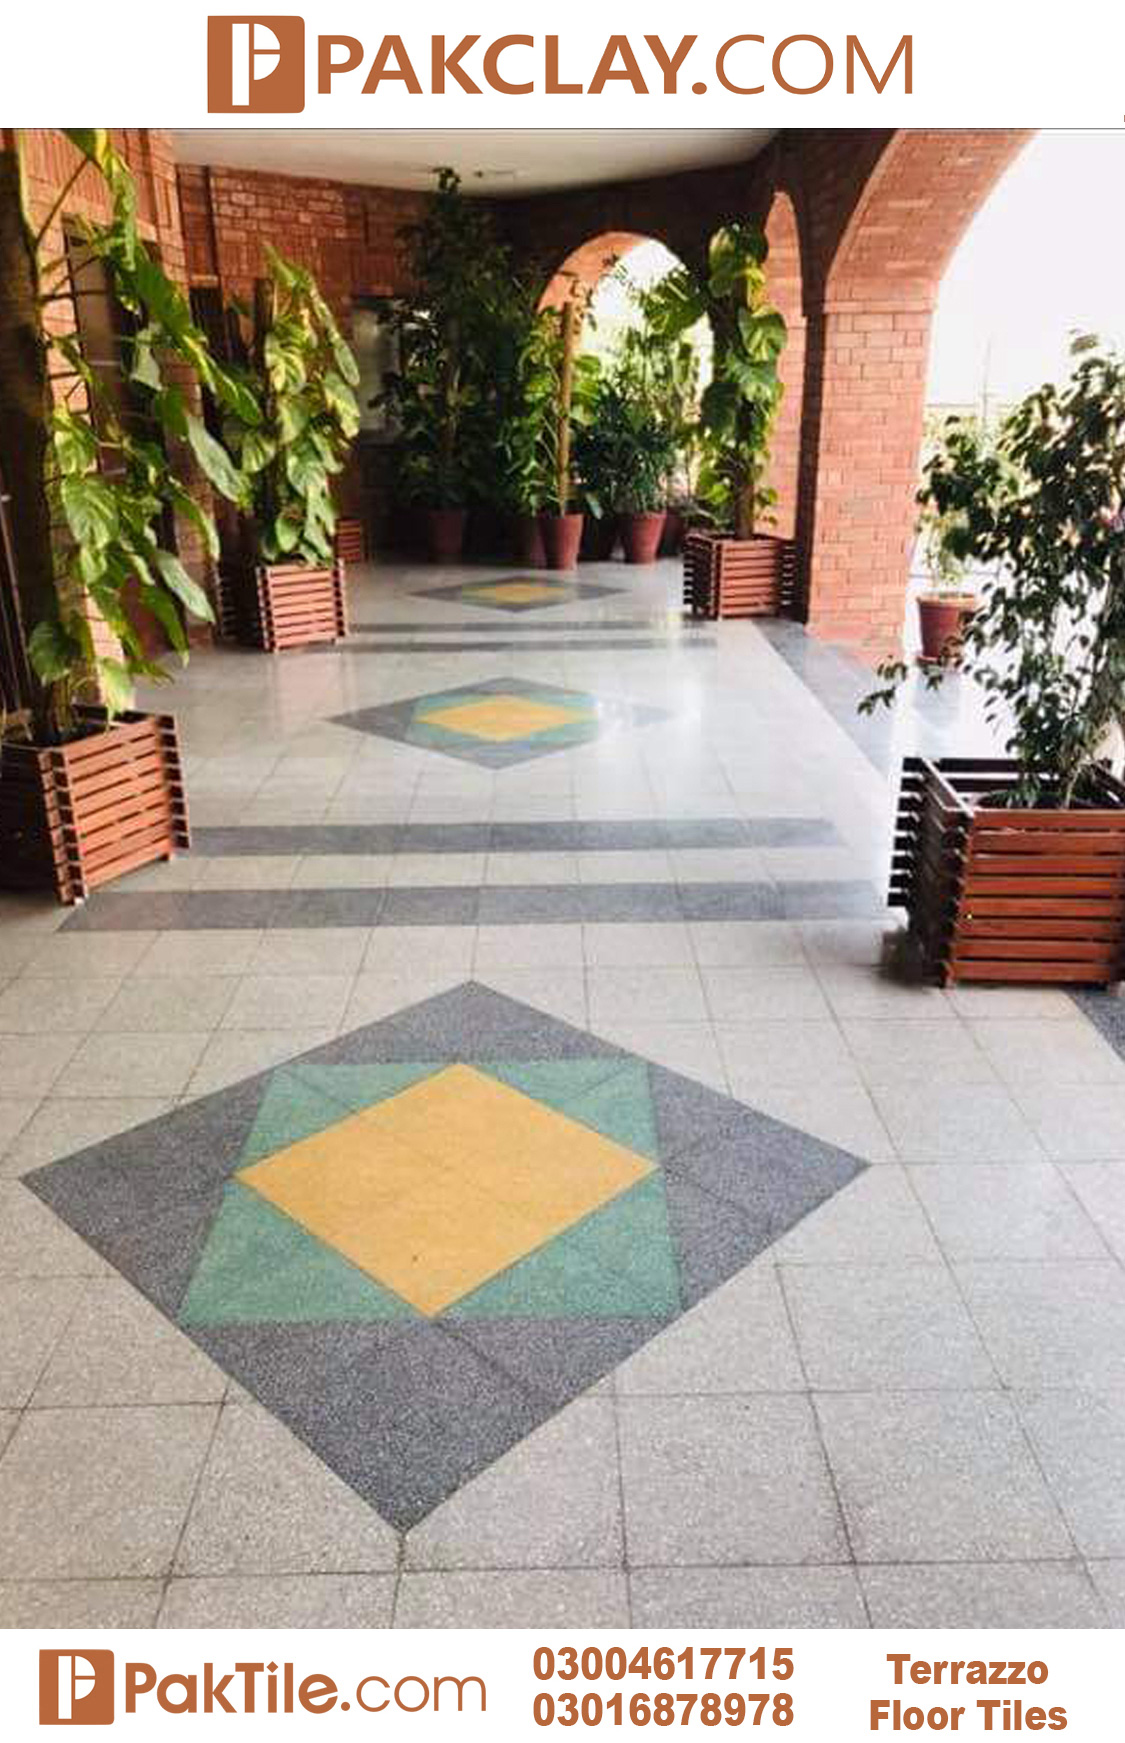 Where to buy terrazzo floor tiles